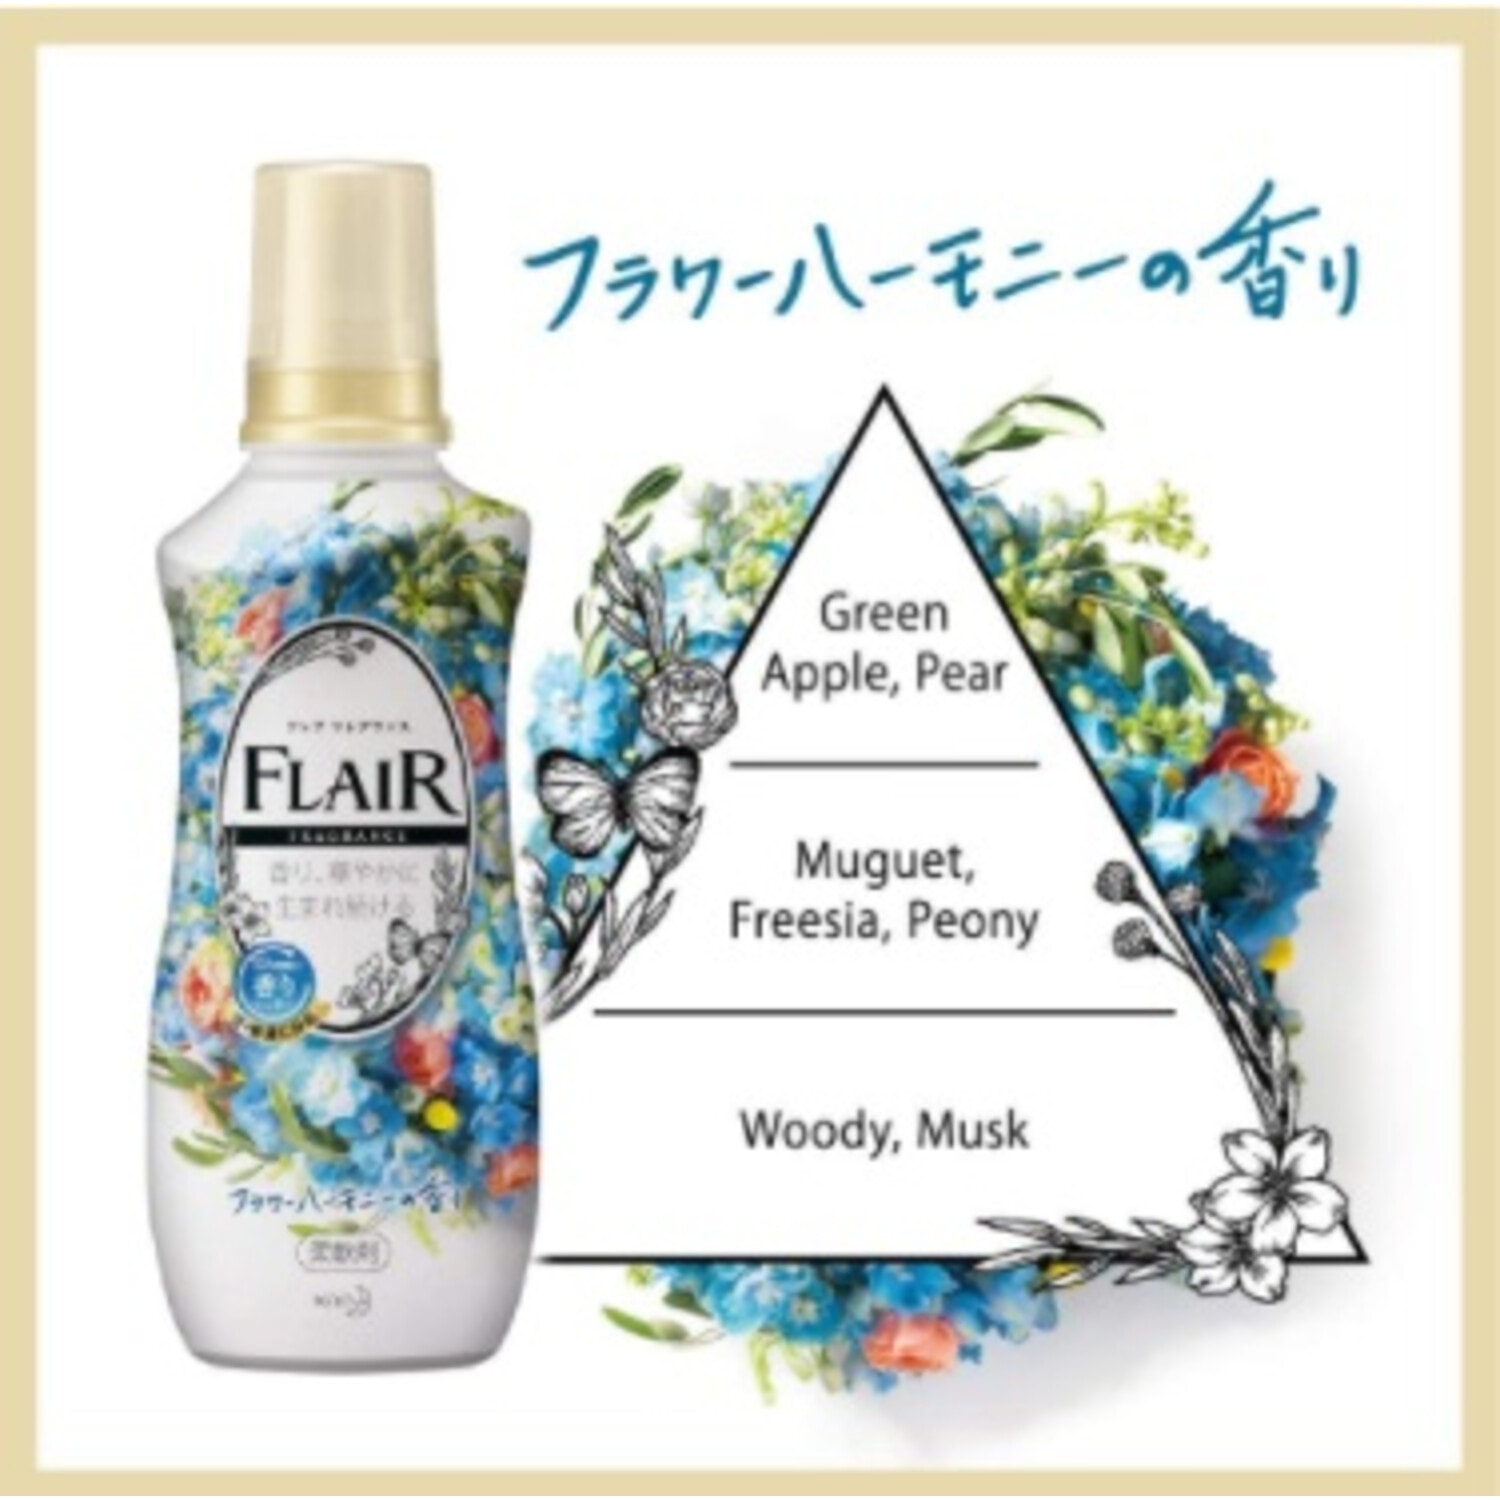 KAO Flair Fragrance Арома кондиционер для белья, аромат Цветочная гармония, 540 мл. / 377388